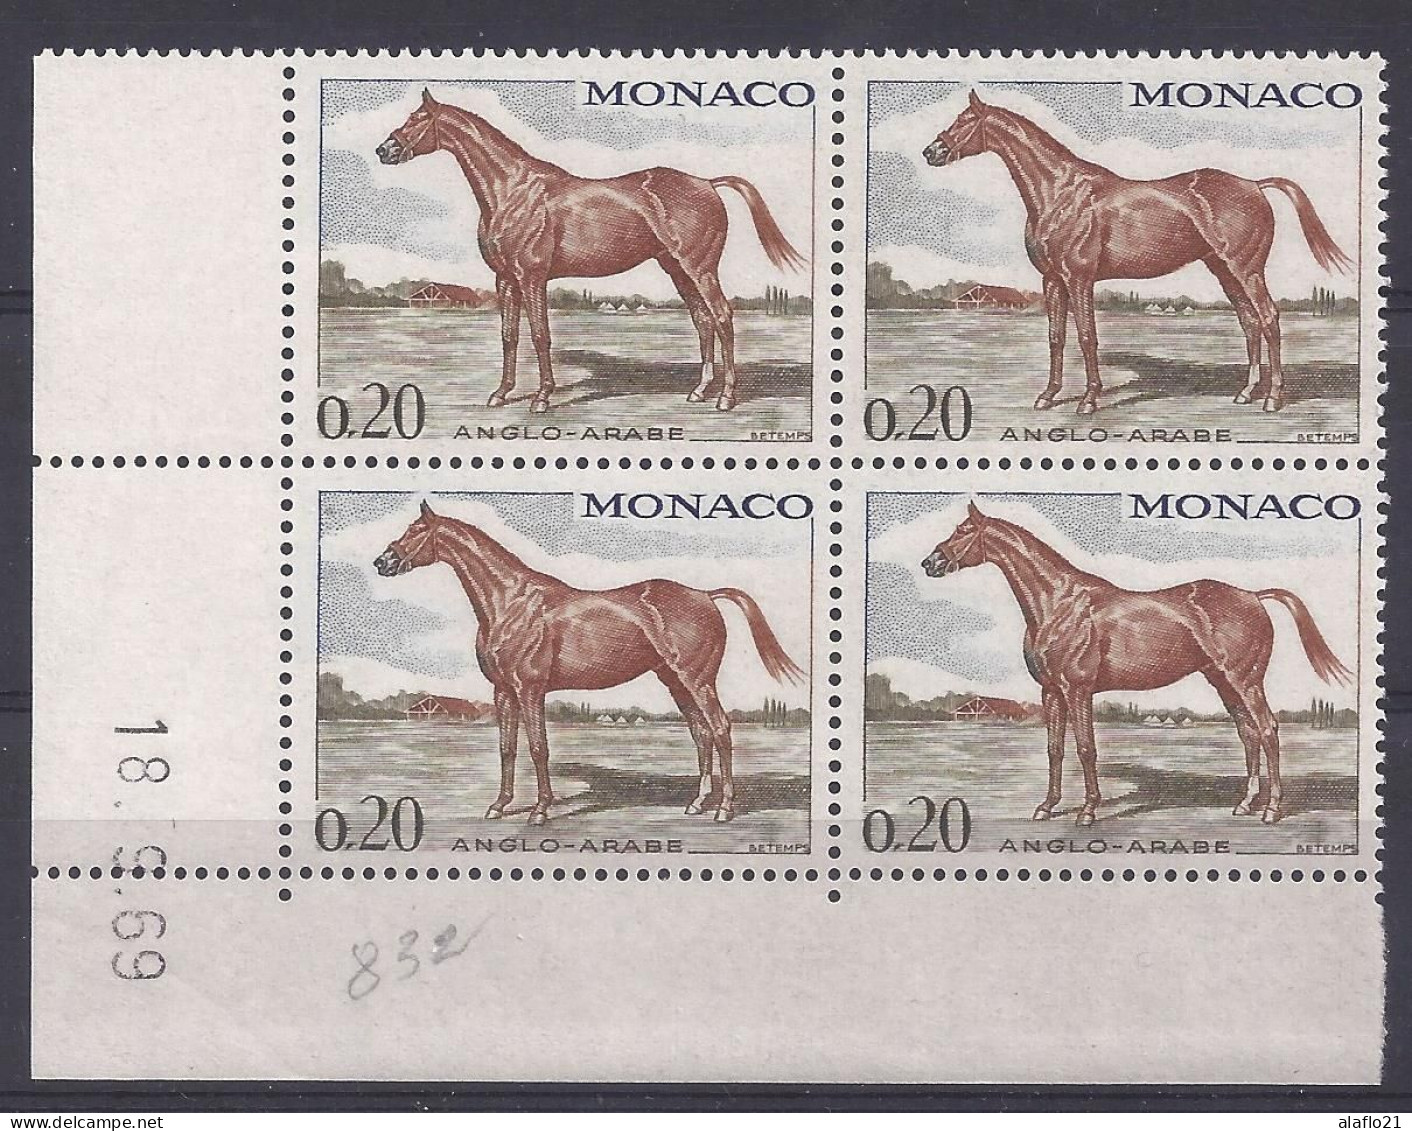 MONACO N° 832 - CHEVAL ANGLO-ARABE - BLOC De 4 COIN DATE - NEUF SANS CHARNIERE - 18/9/69 - Nuovi